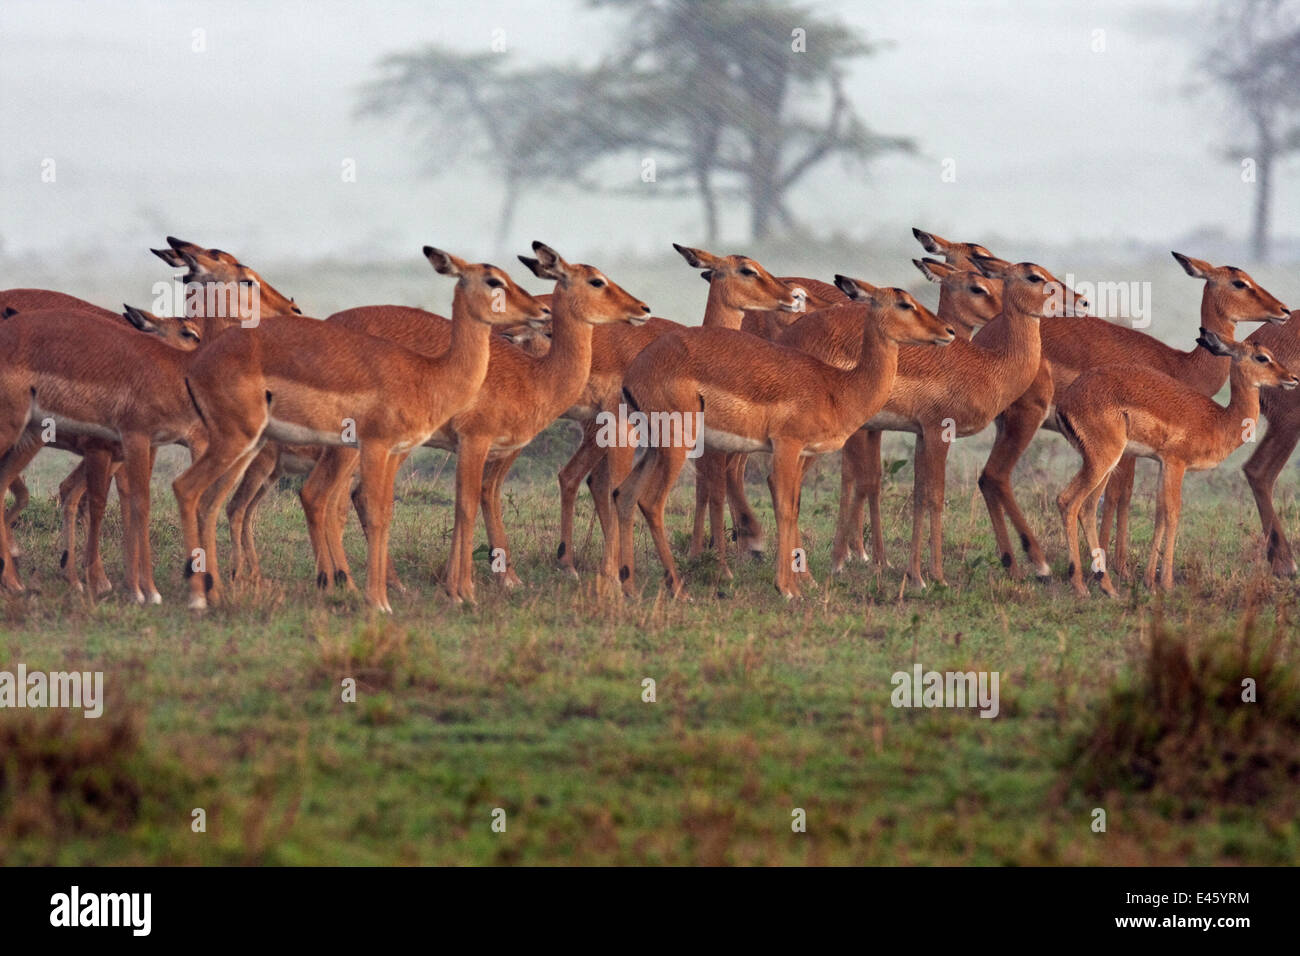 Impala herd (Aepyceros melampus) huddled together in the rain, Masai Mara National Reserve, Kenya. April Stock Photo